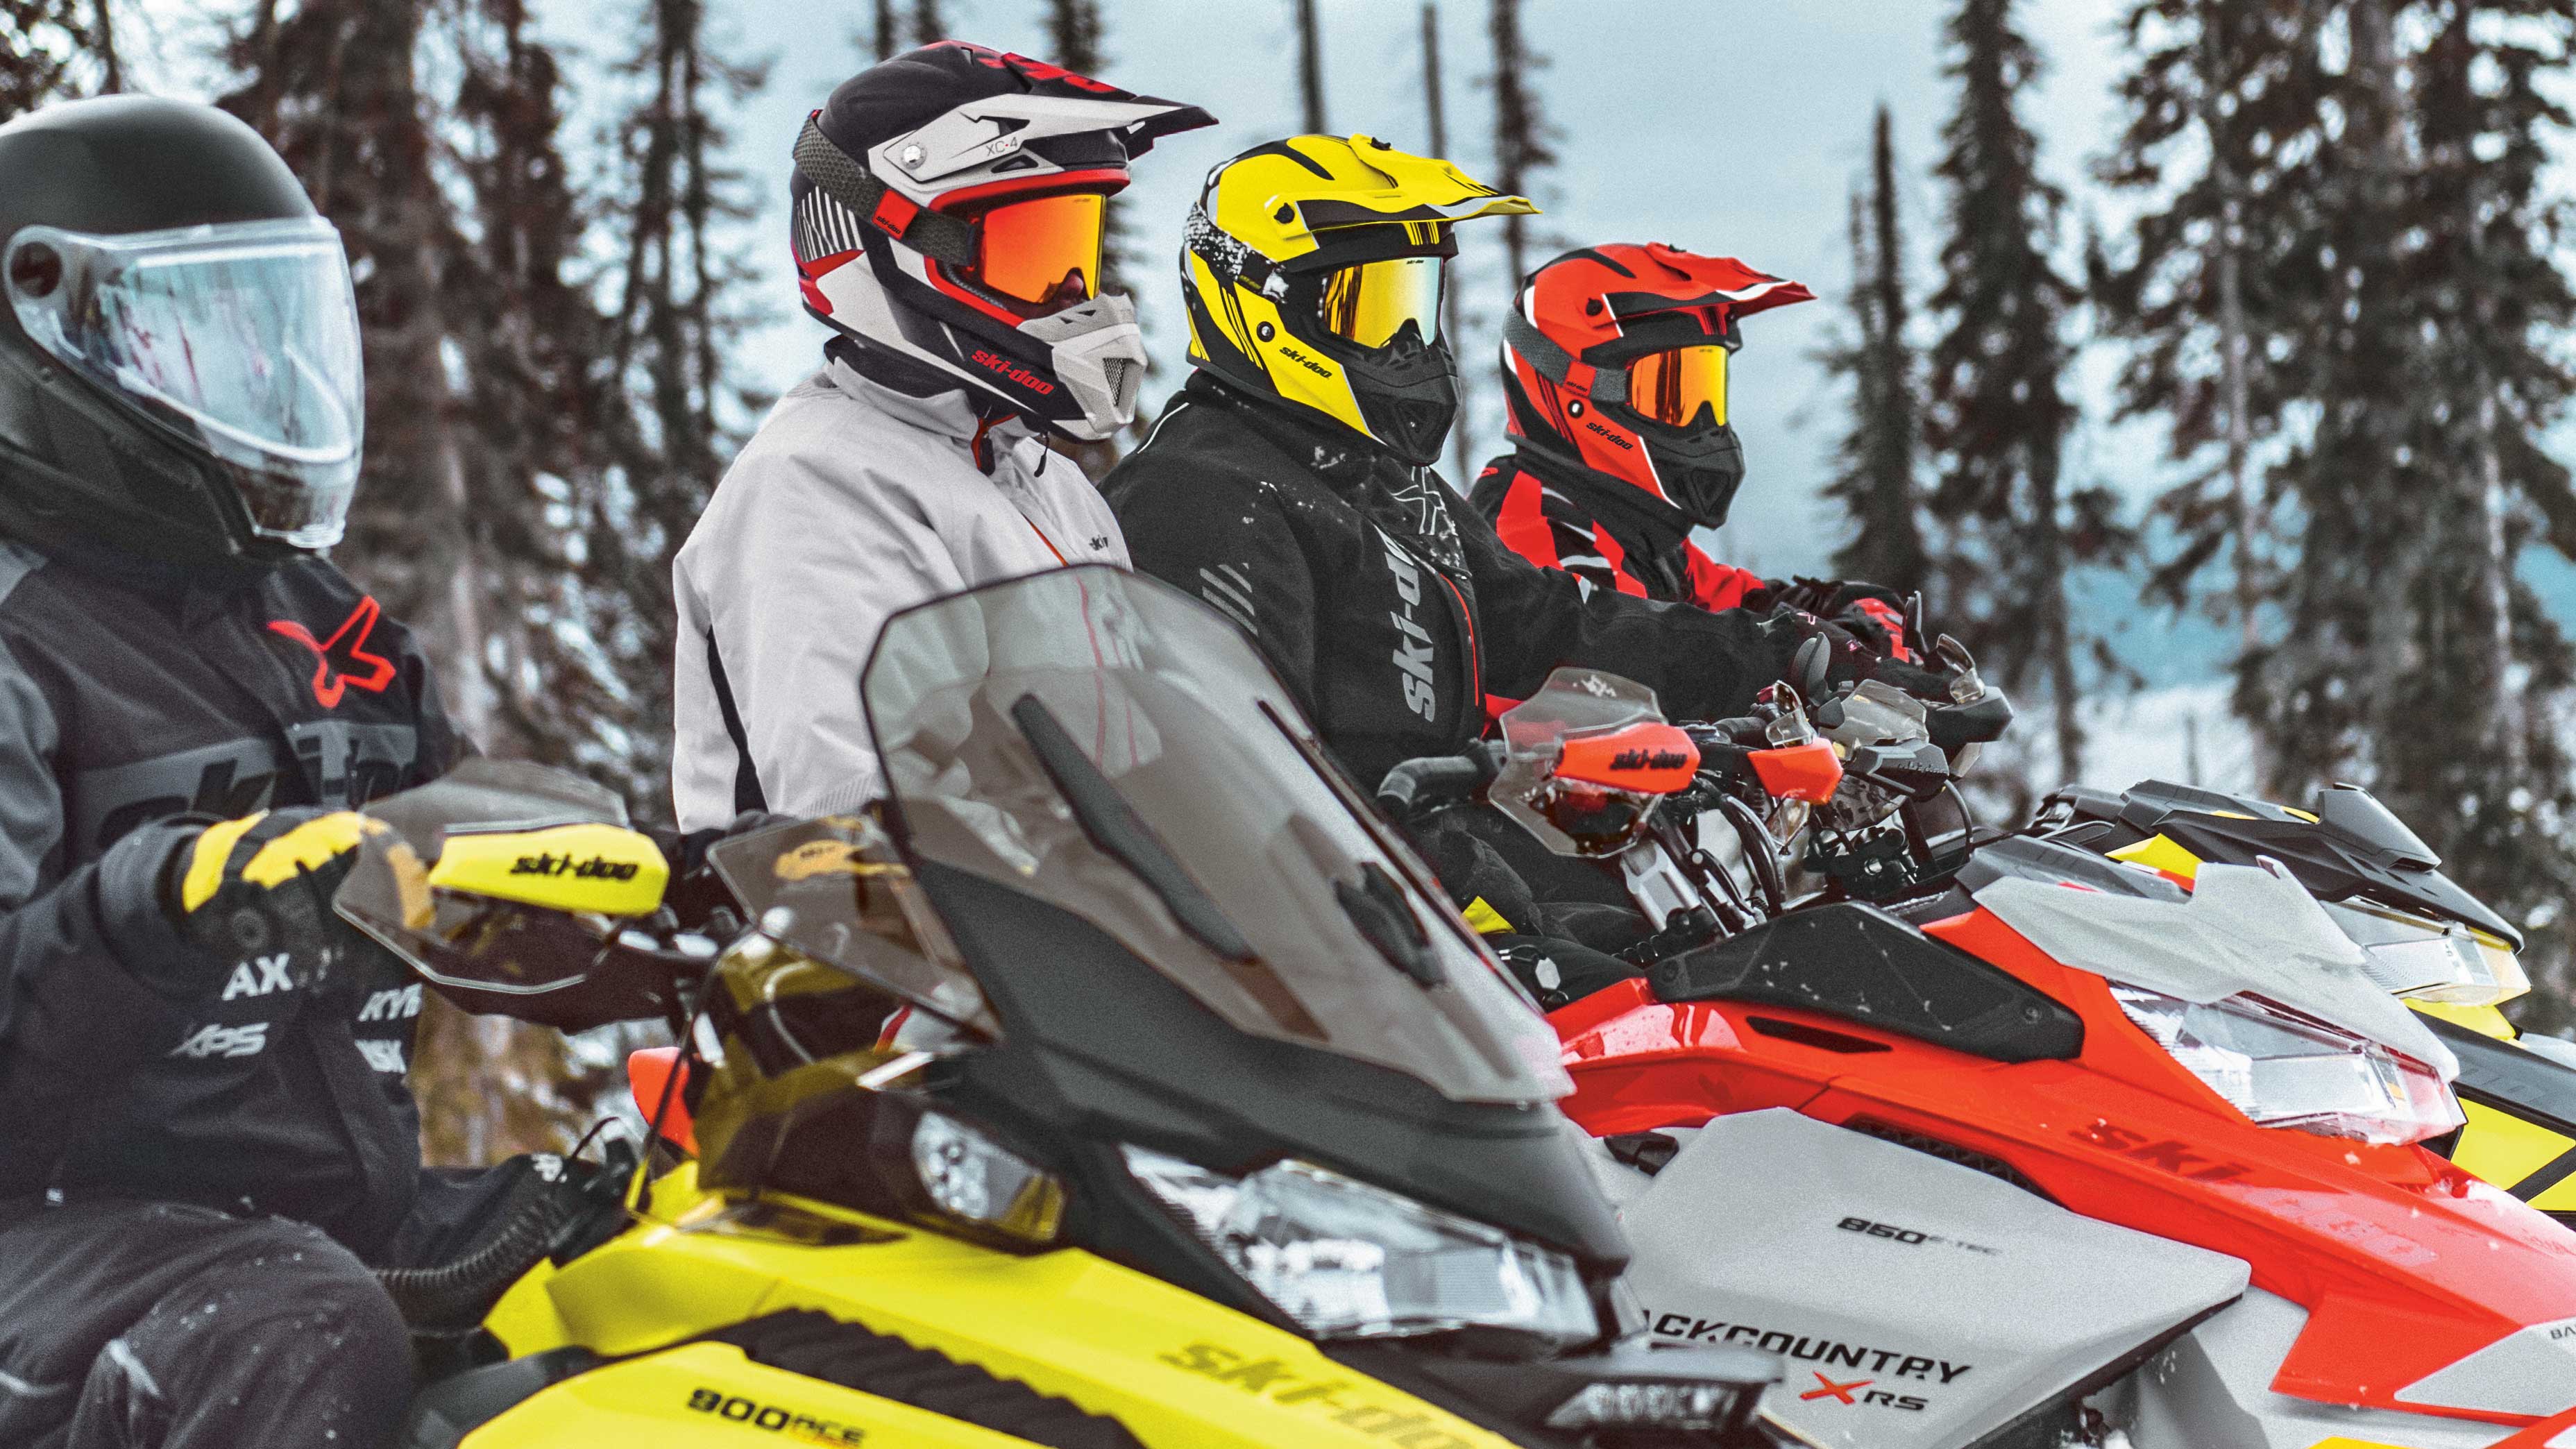 4 riders riding a Ski-Doo snowmobile